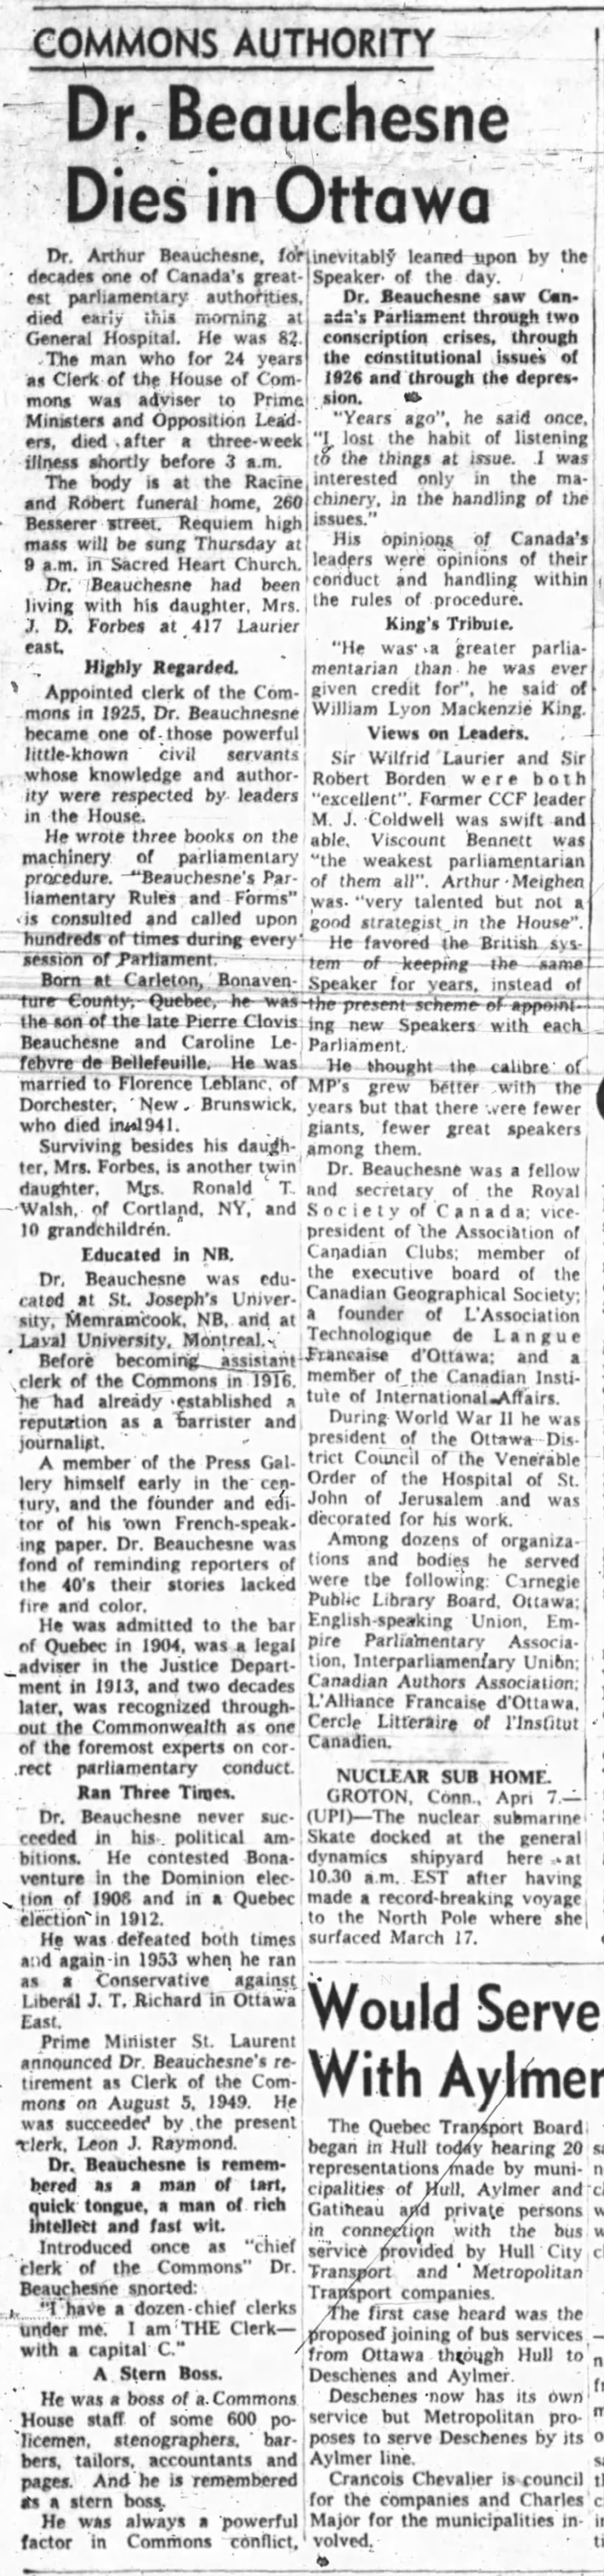 The Ottawa Journal,
7 April 1959, page 5, cols. 1& 2.